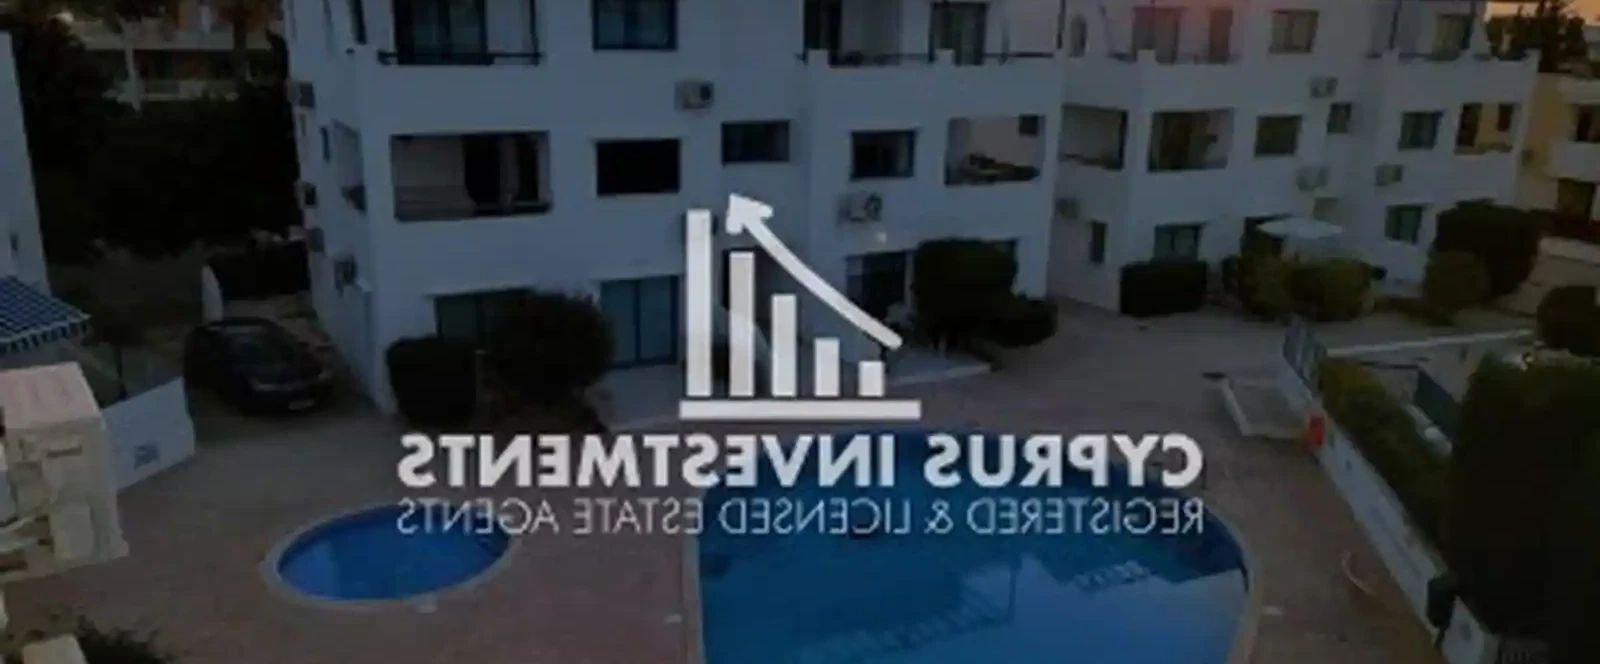 3-bedroom penthouse fоr sаle €279.000, image 1